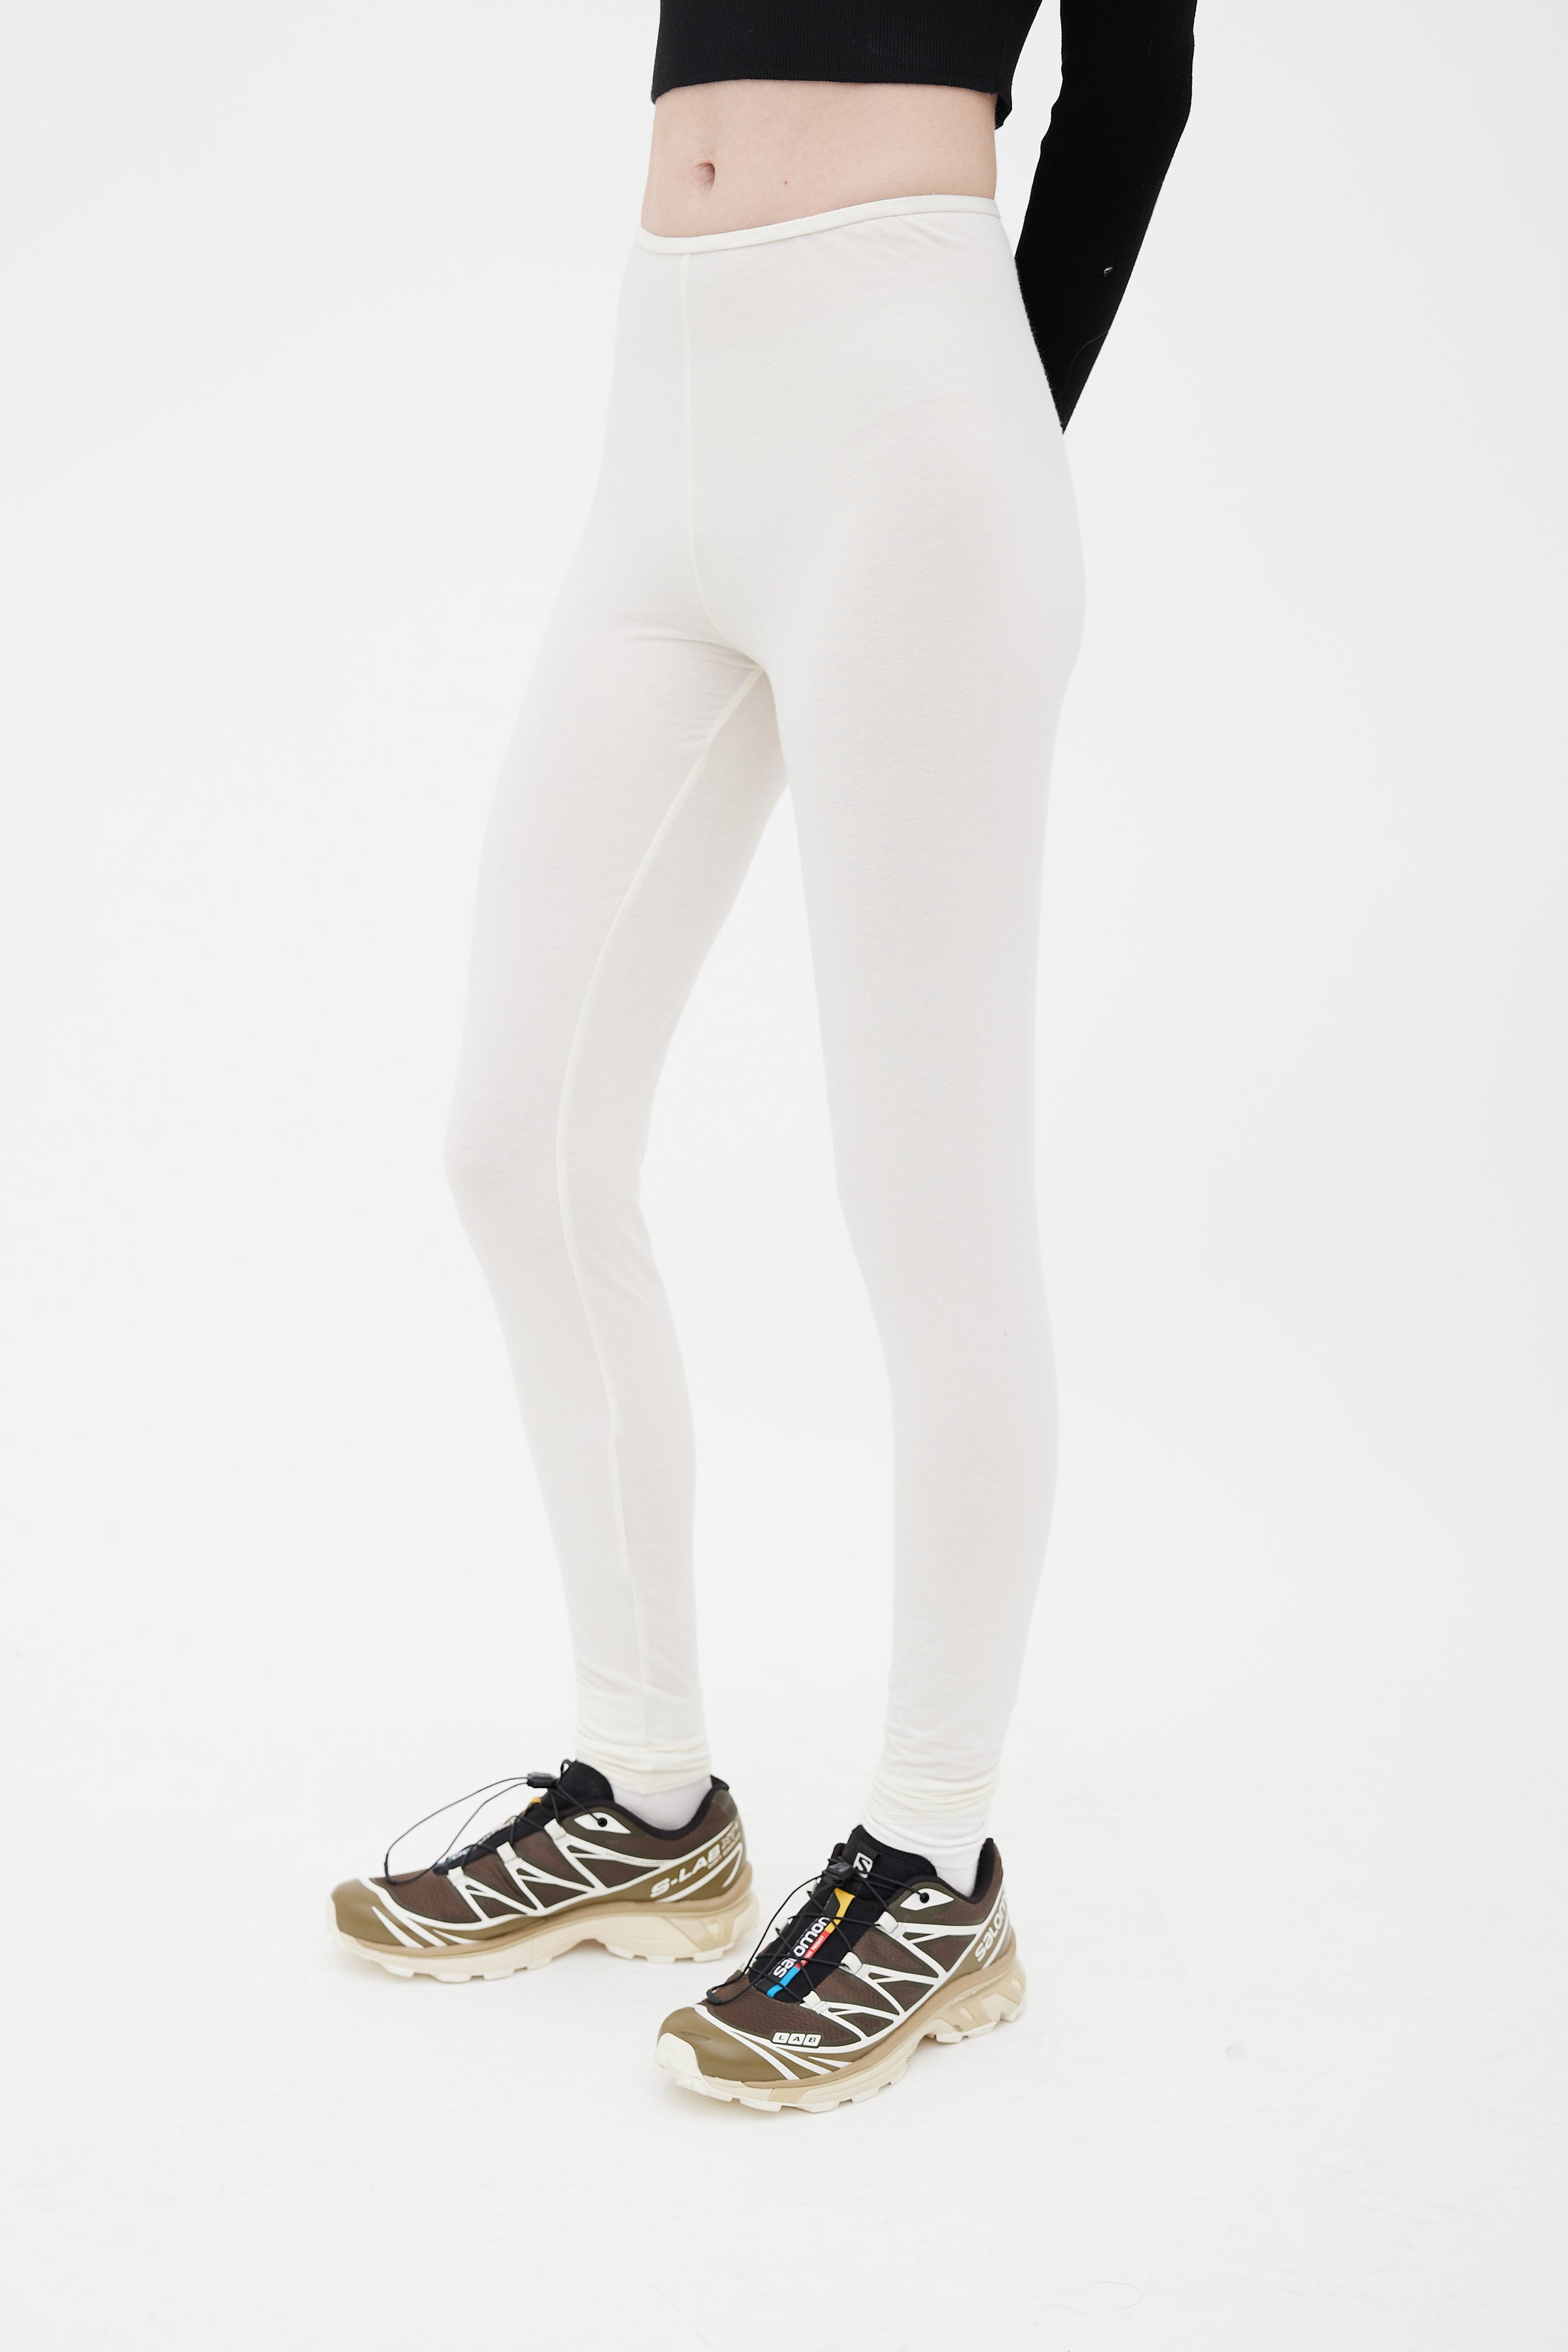 Women's Ultra thin See Through Leggings Super Elastic Long Pants Sheer  Trousers | eBay